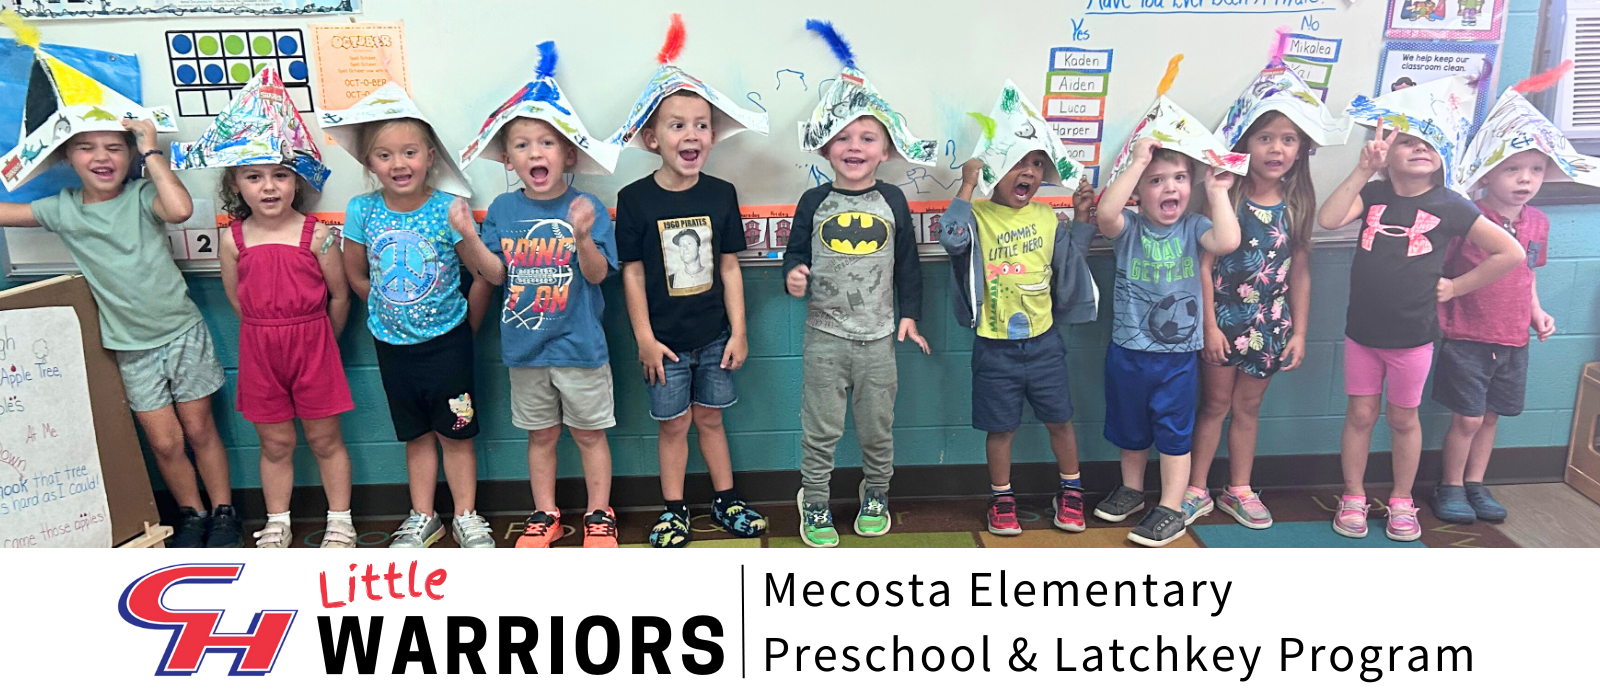 Mecosta Elementary Little Warriors